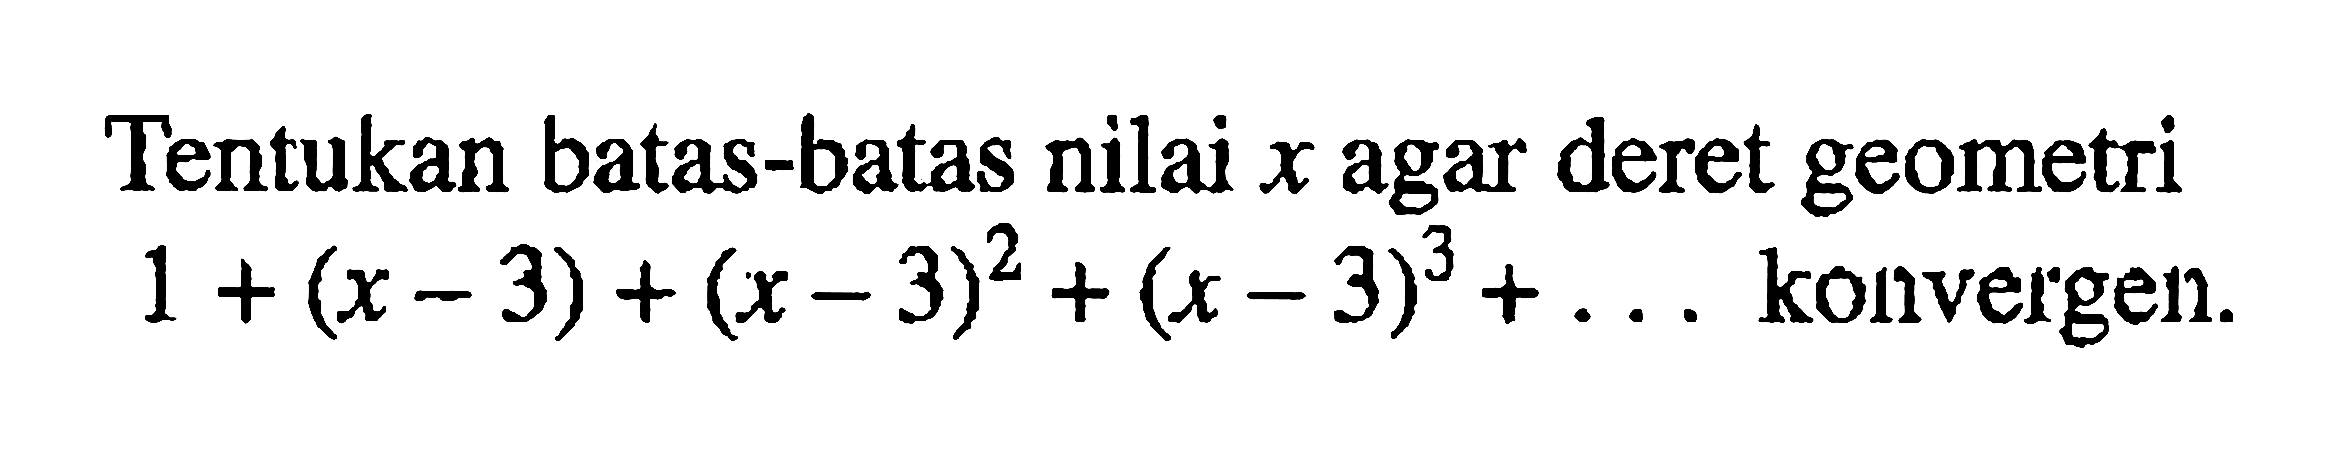 Tentukan batas-batas nilai x agar deret geometri 1+(x-3)+(x-3)^2+(x-3)^3+... konvergen.